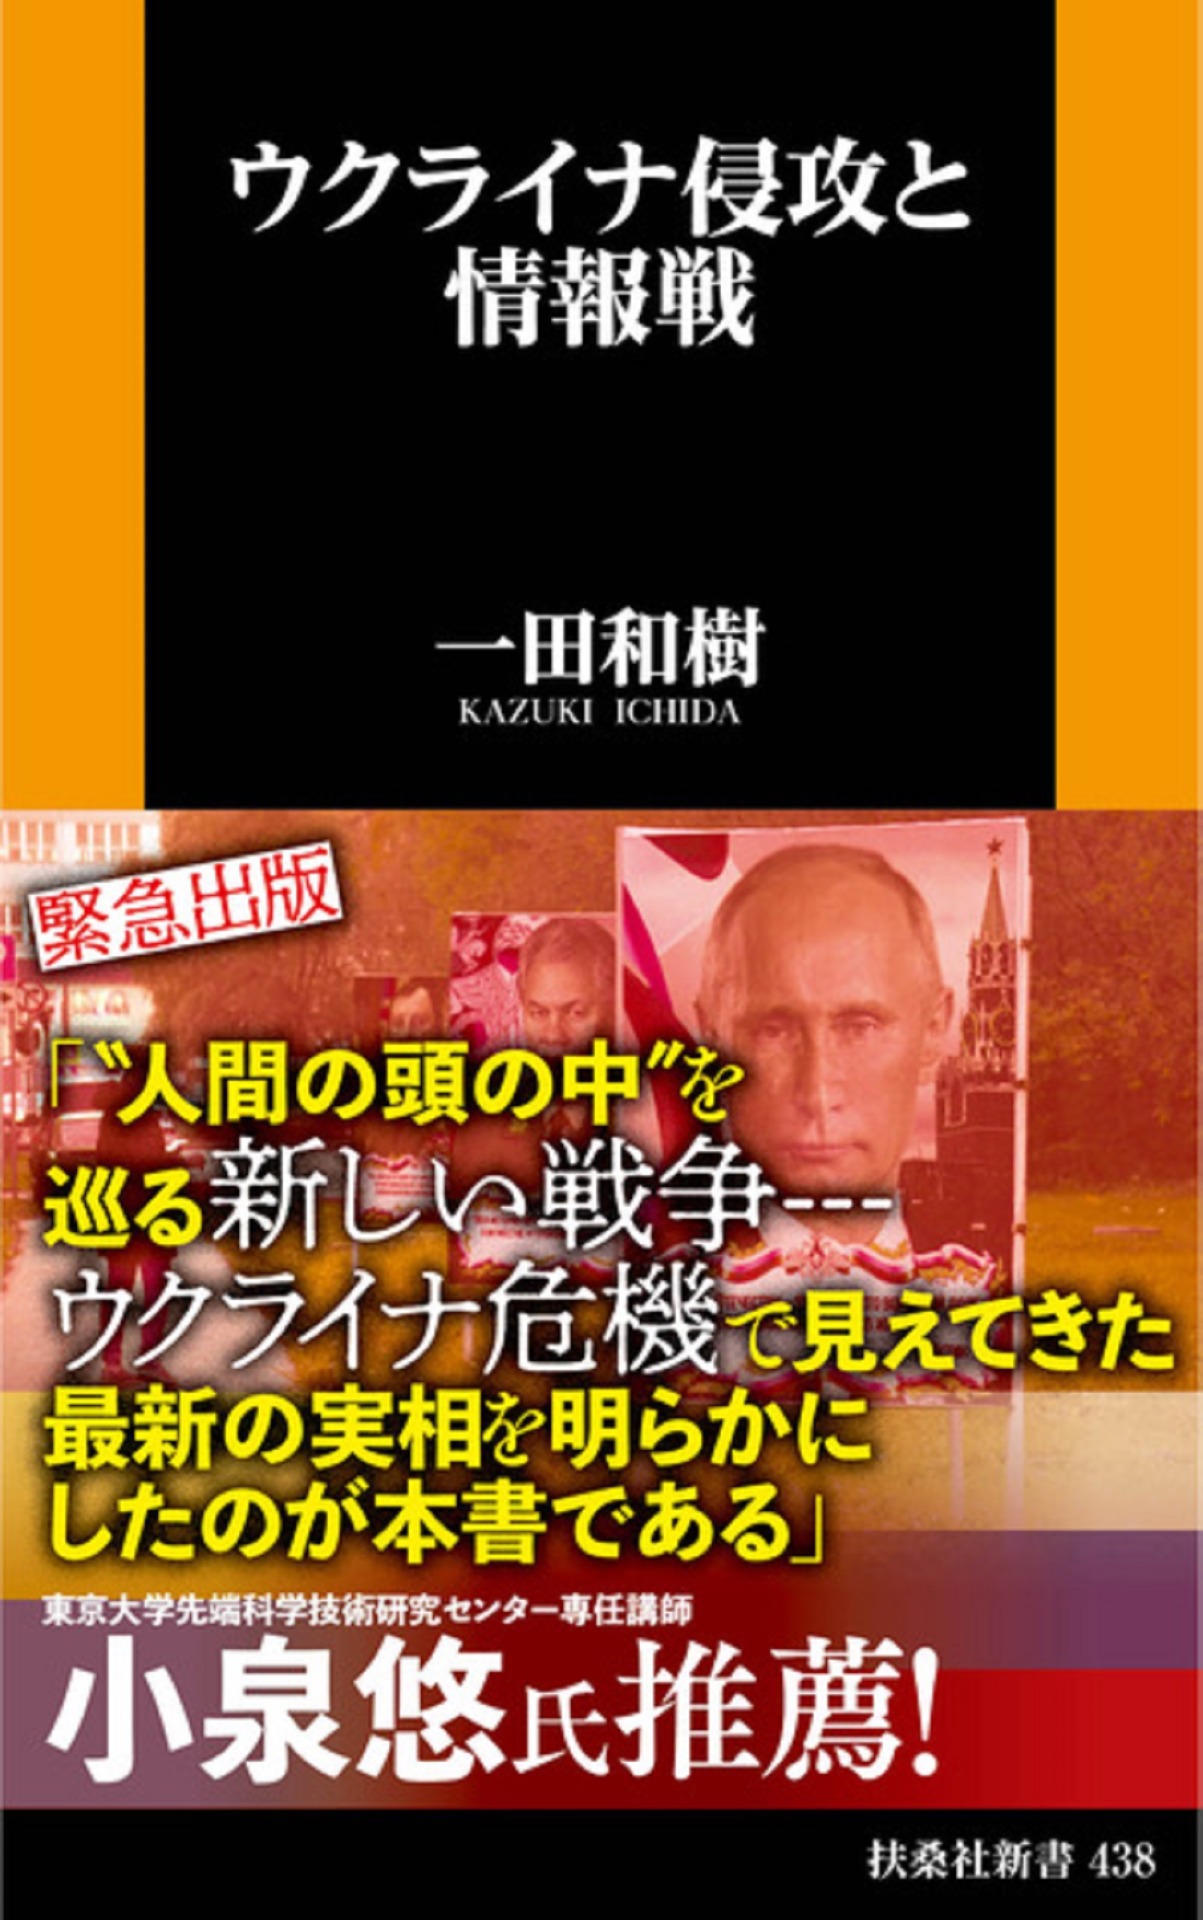 Kazuki Ichida 一田和樹 公式サイト — 「大正地獄浪漫 4」 星海社 